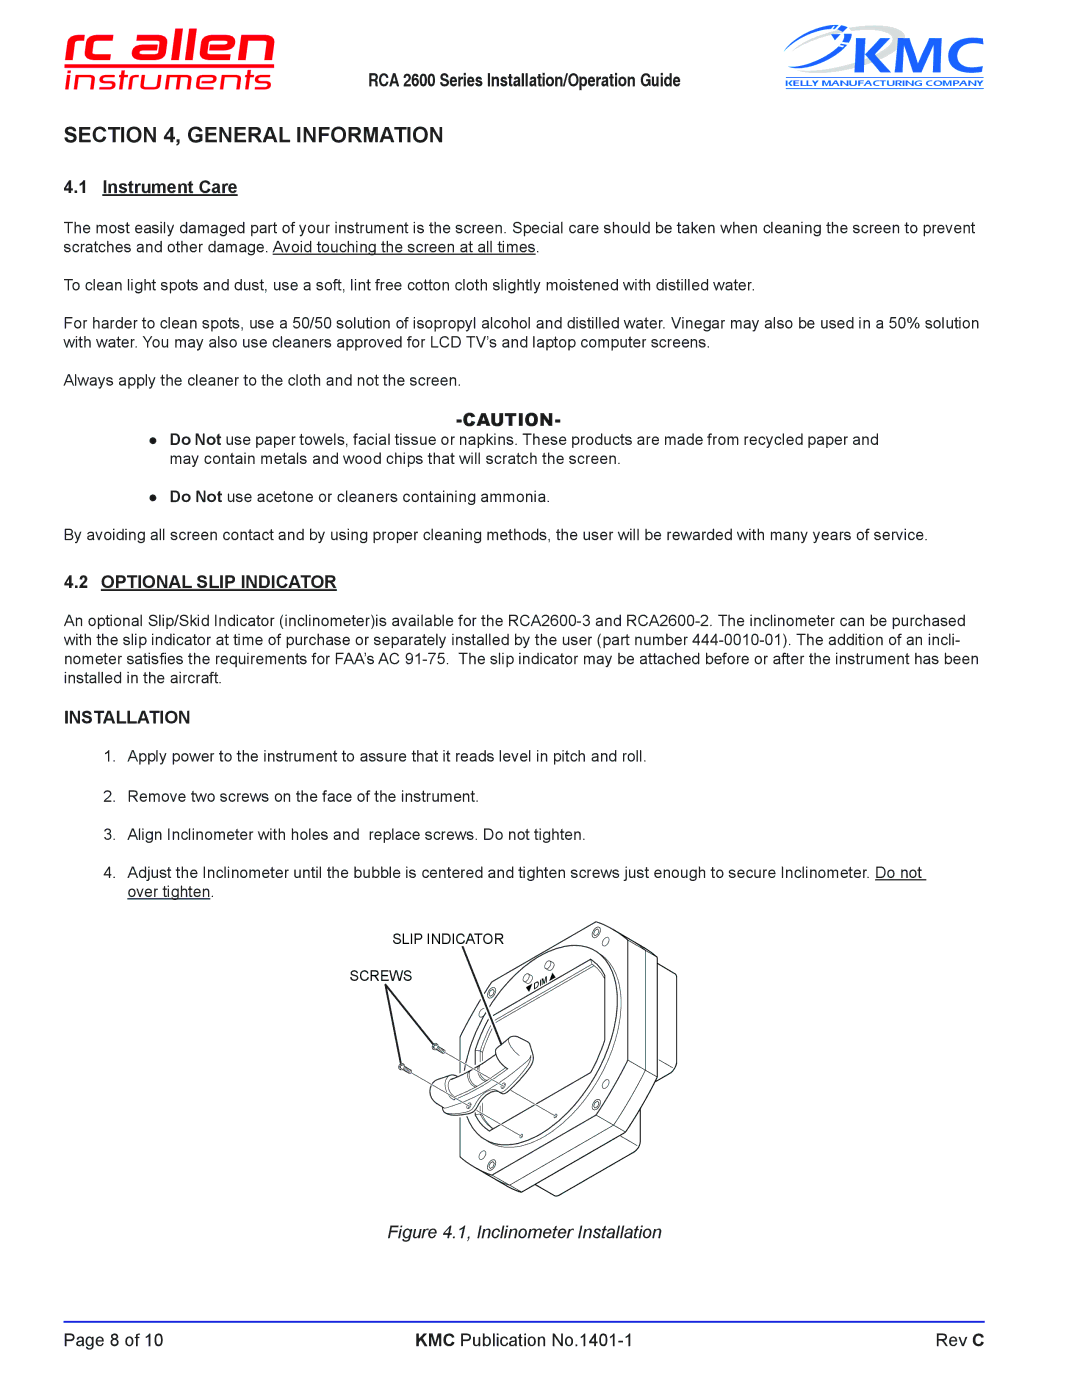 KMC RCA 2600-3 manual General Information, Optional Slip Indicator 